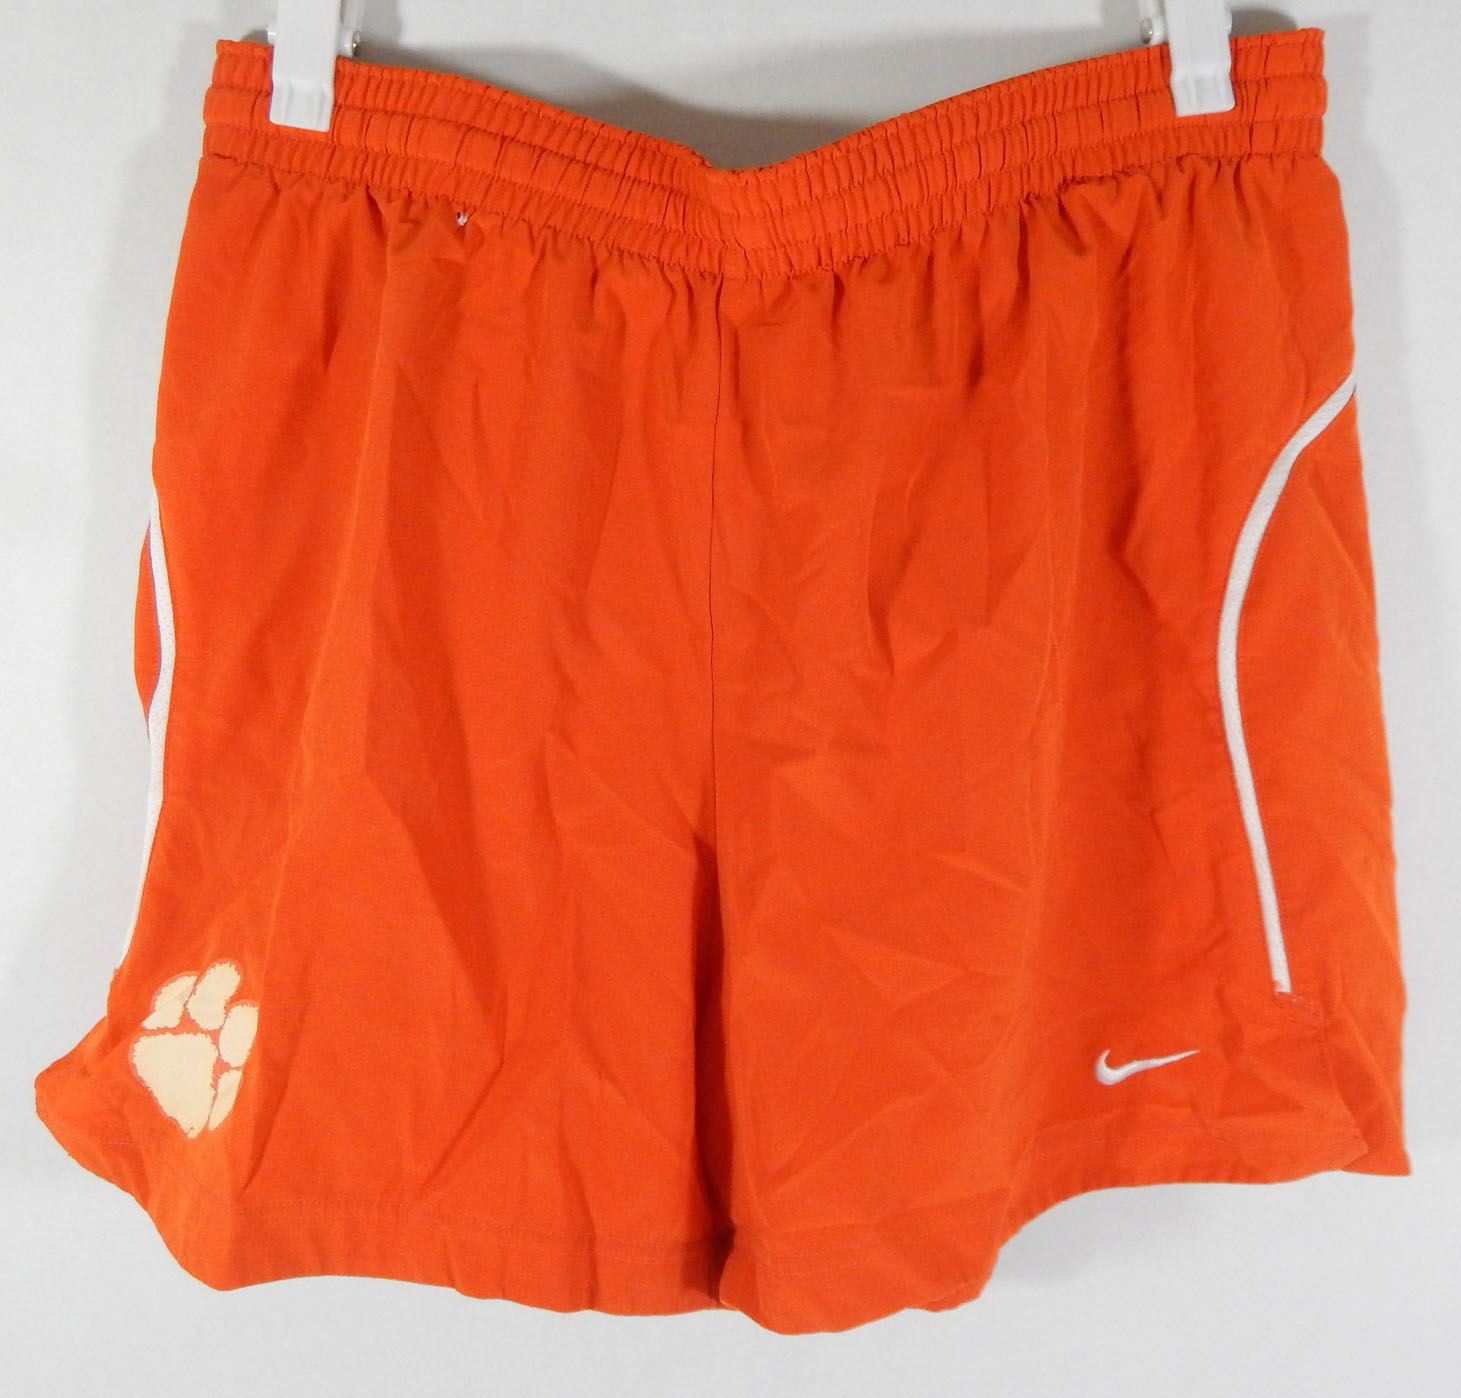 Clemson Tigers #19 Game Used Orange Soccer Shorts DP52841